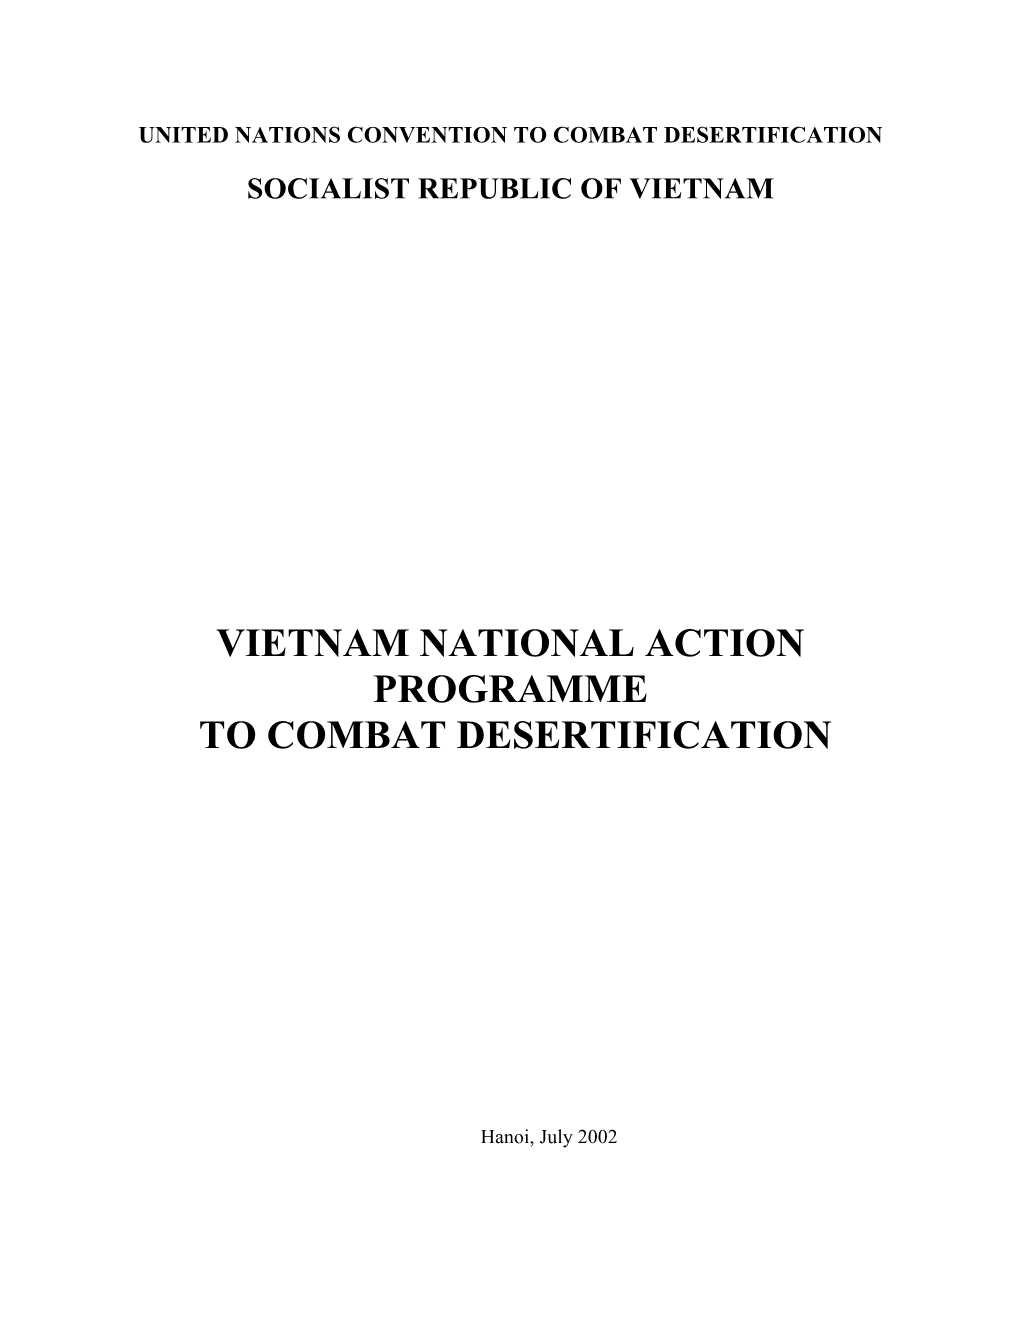 Vietnam National Action Programme to Combat Desertification